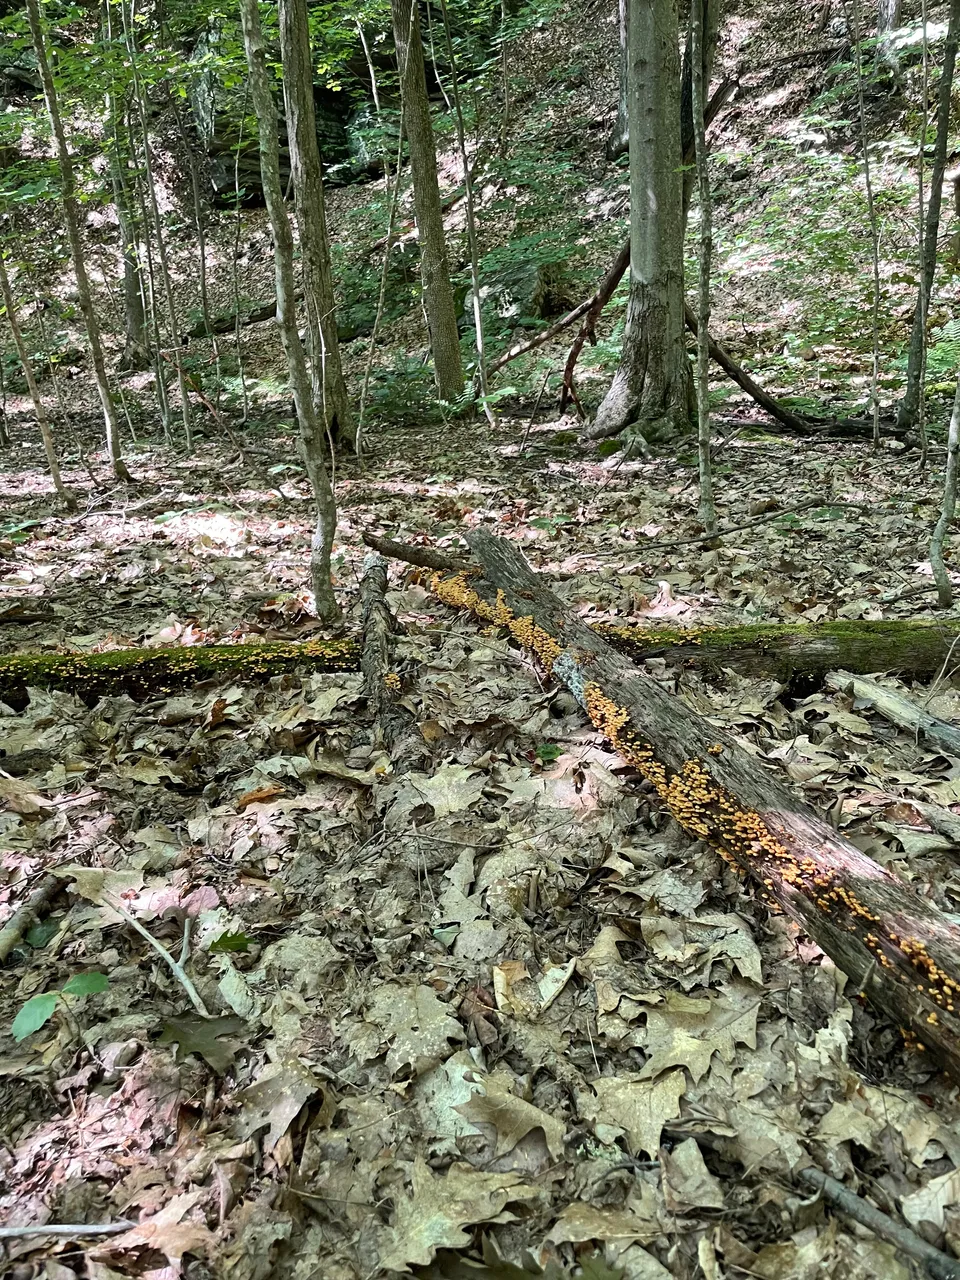 Orange mushooms on logs